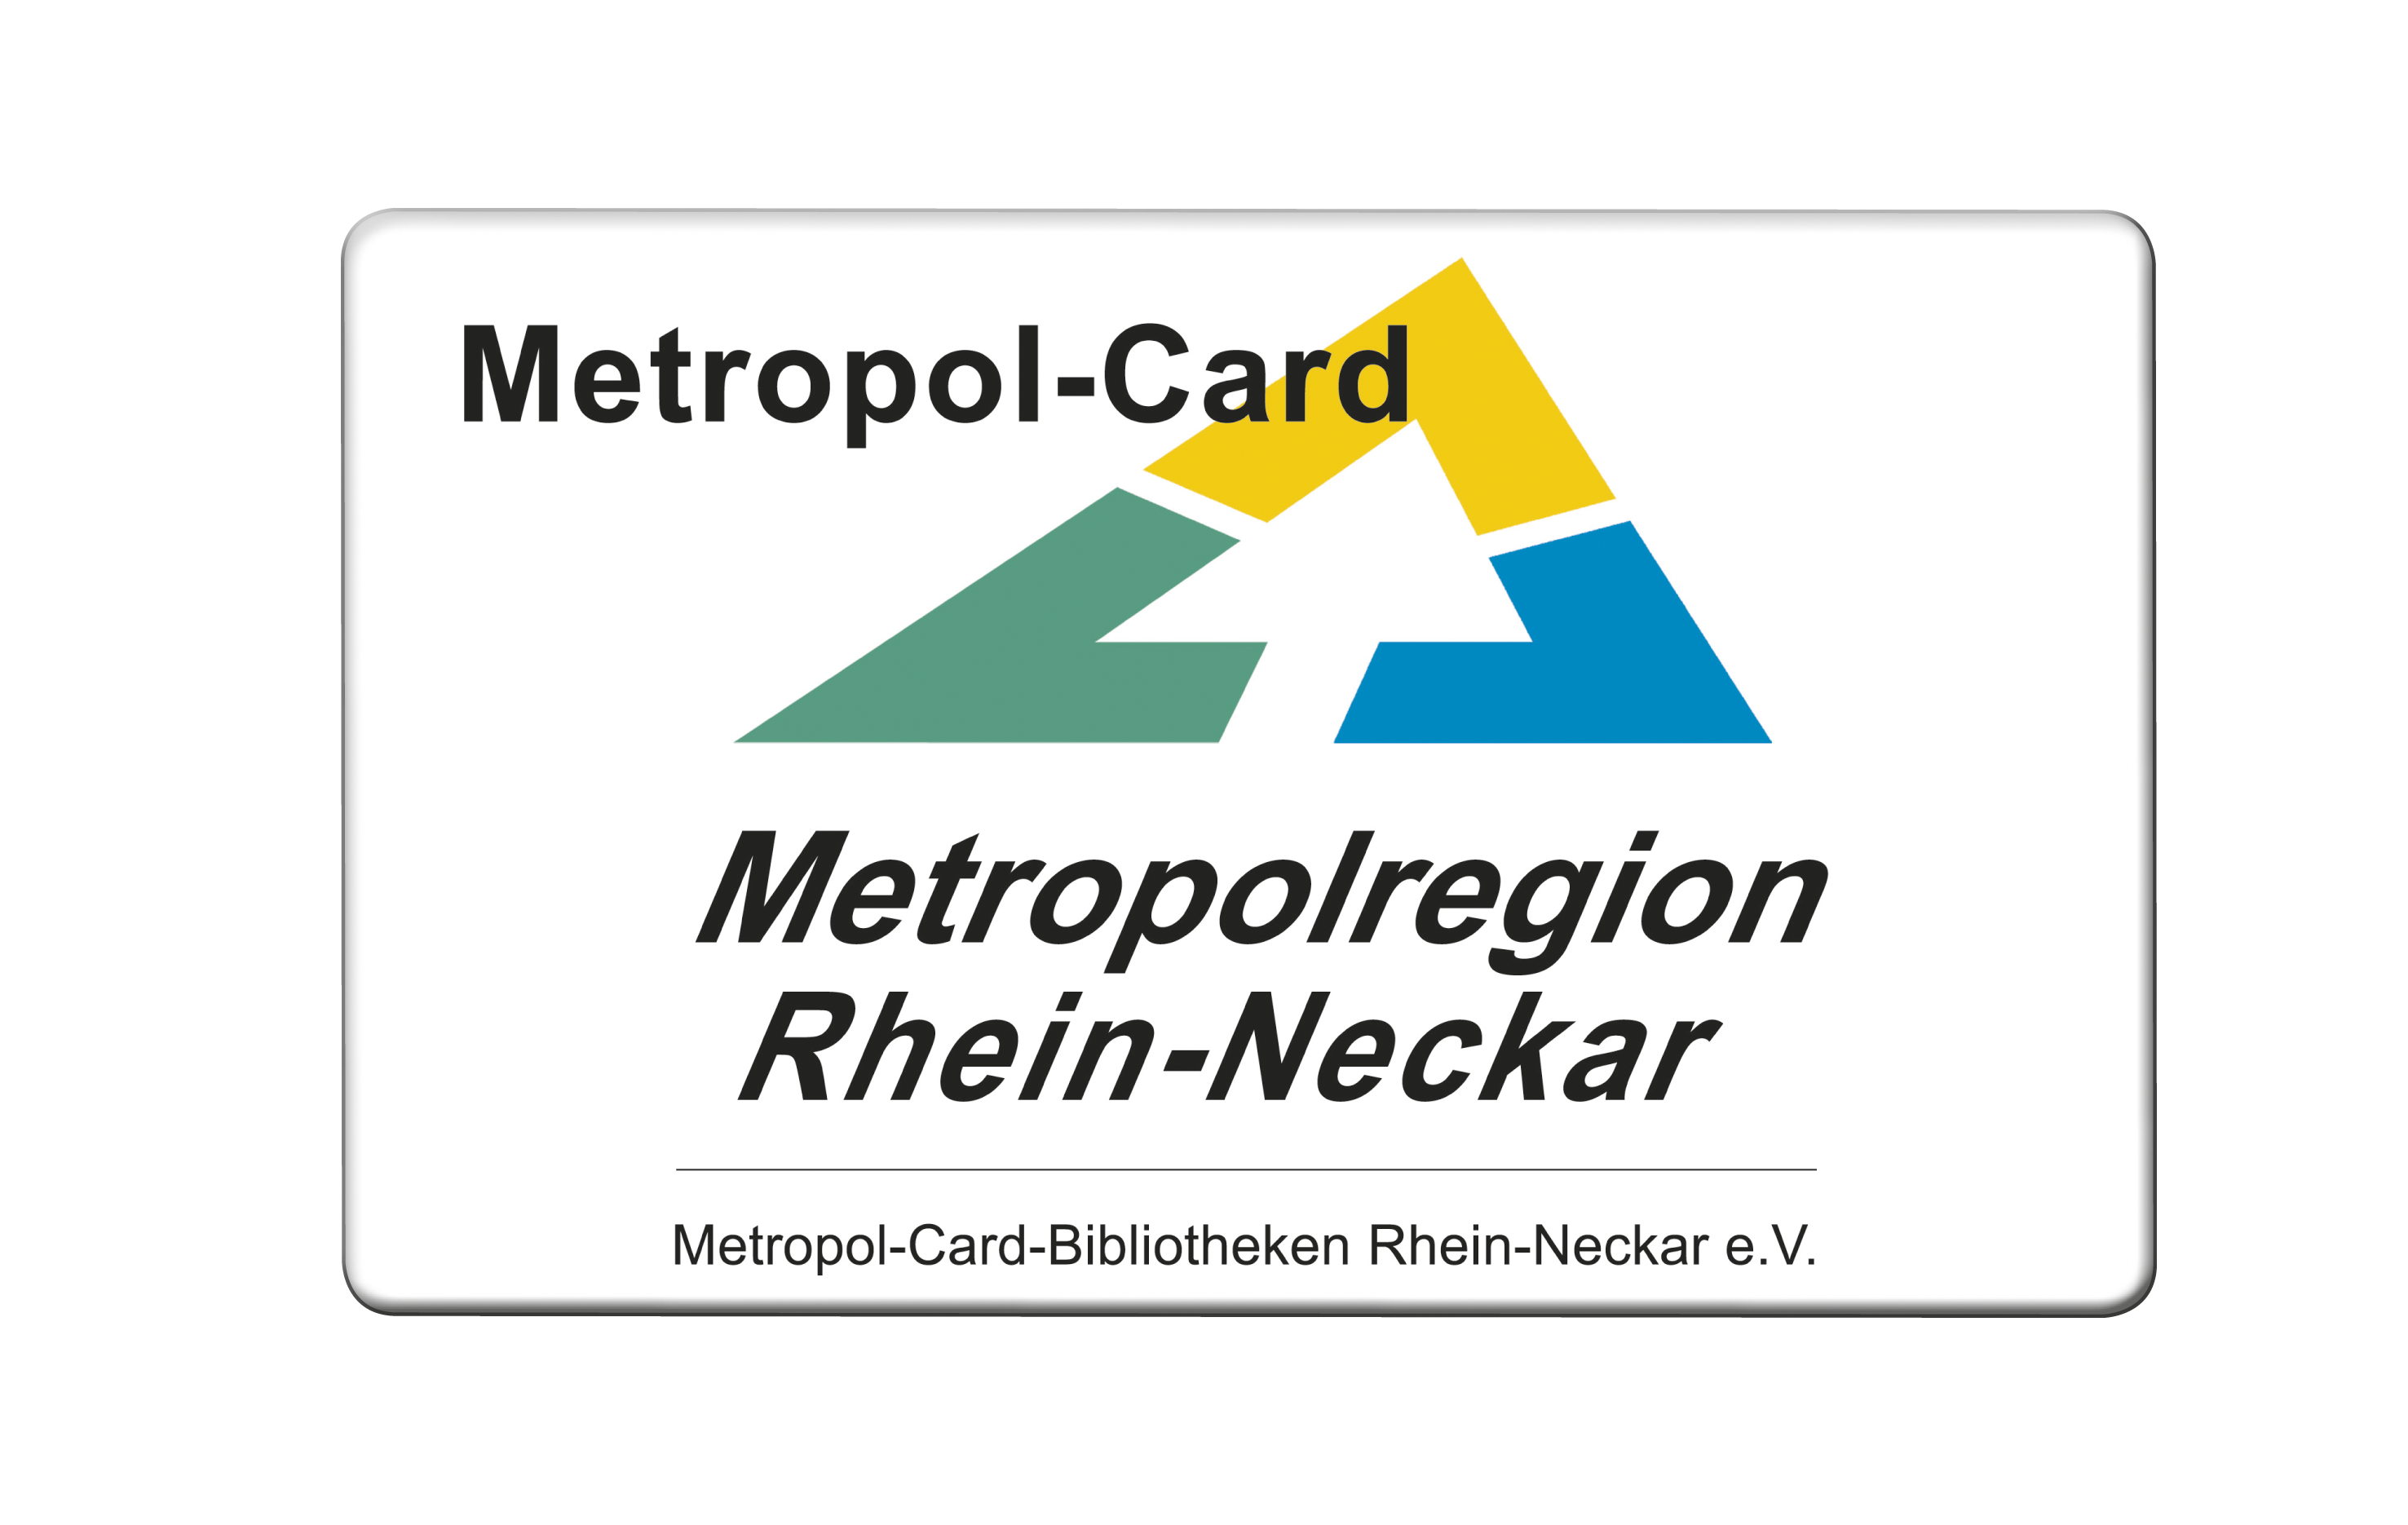 
    
            
                    Metropolcard
                
        
